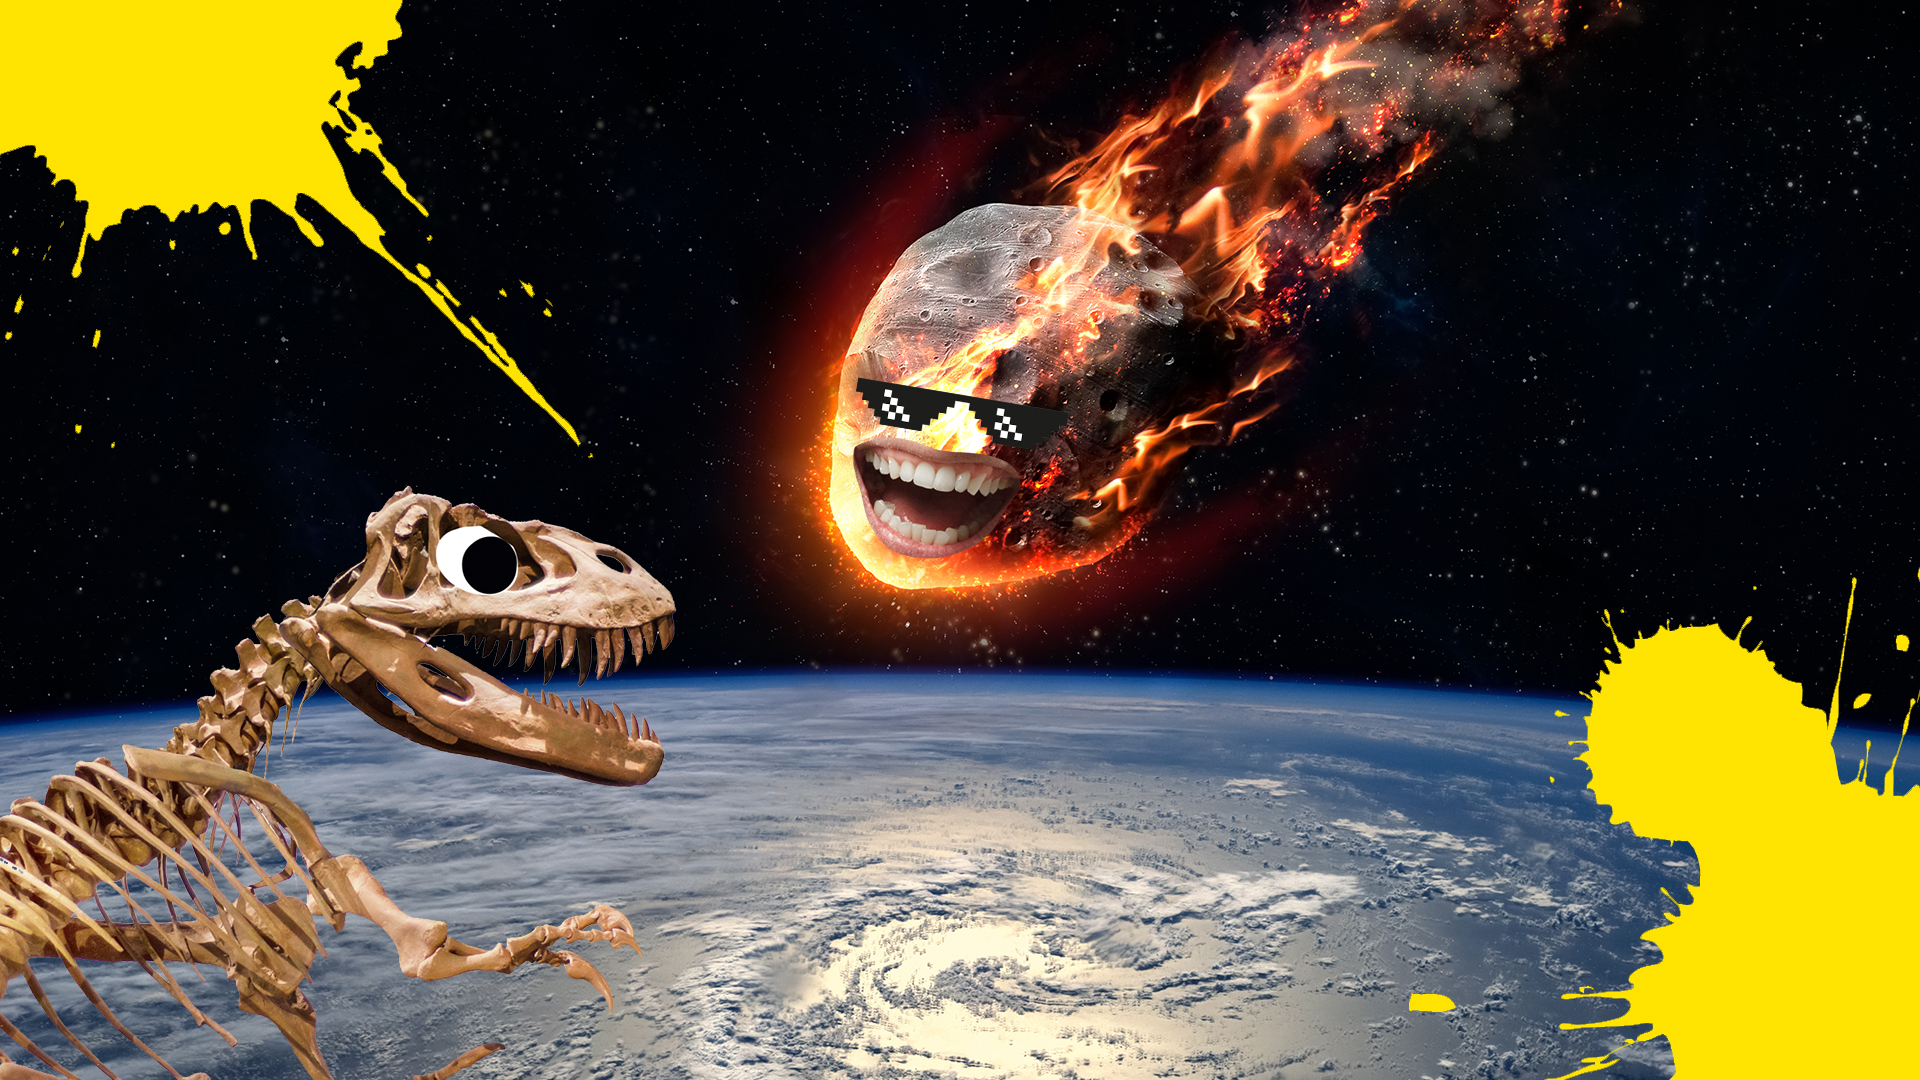 An asteroid hurtles toward a dinosaur